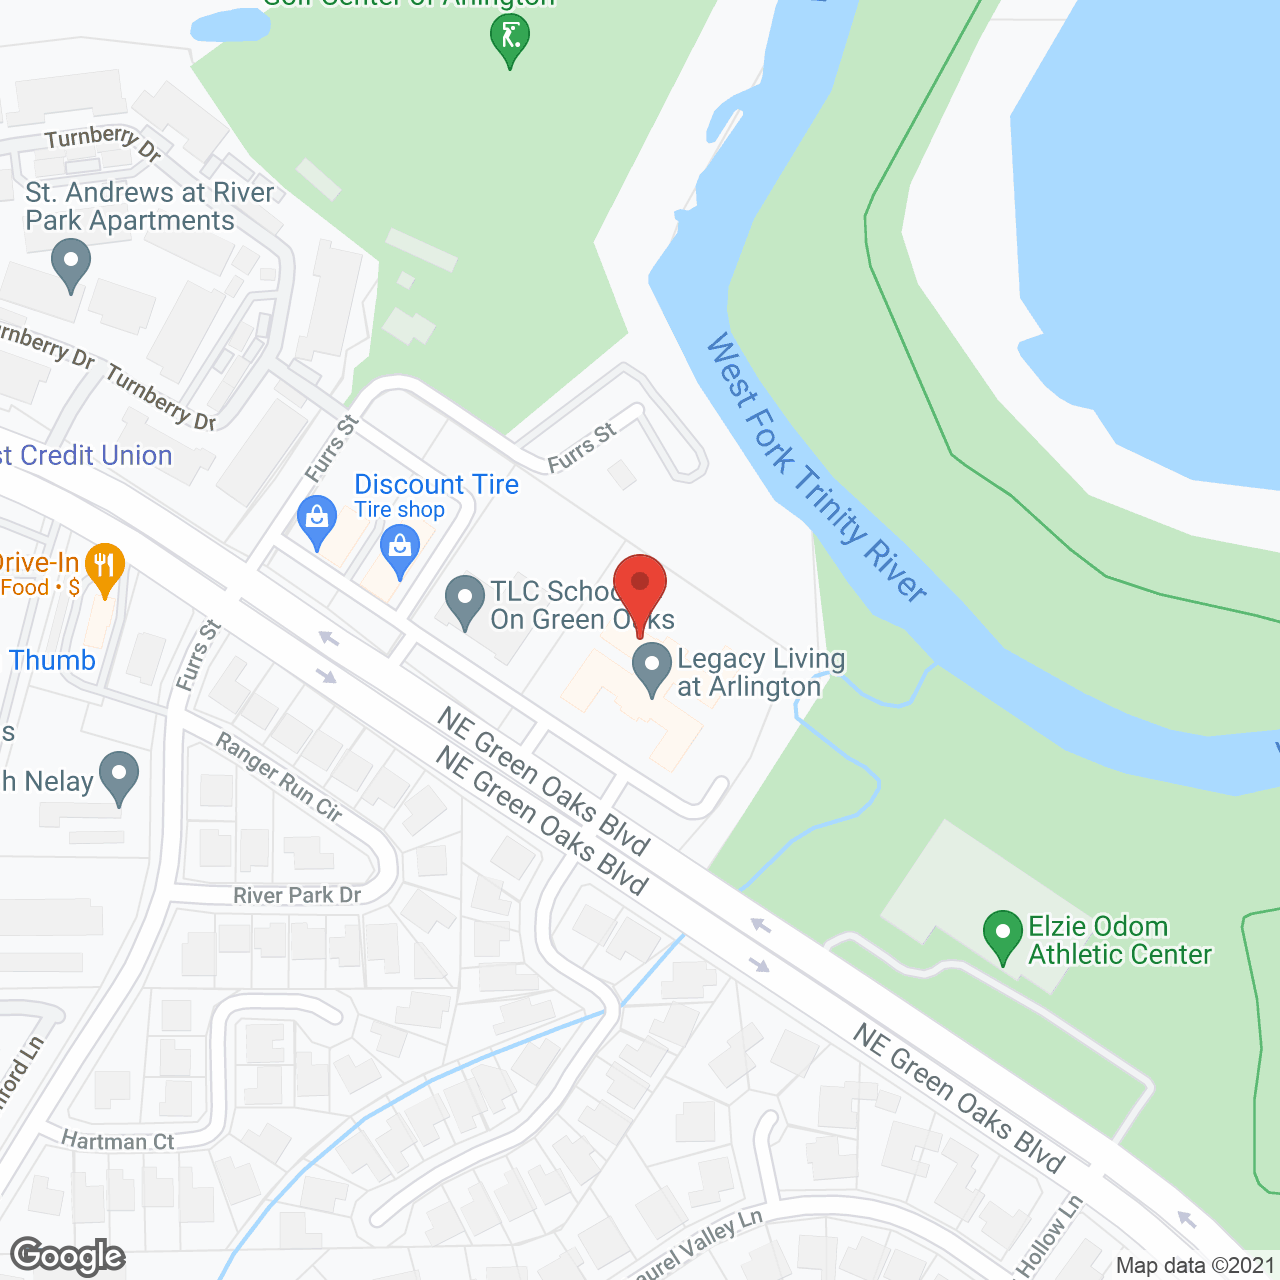 Legacy Living at Arlington in google map